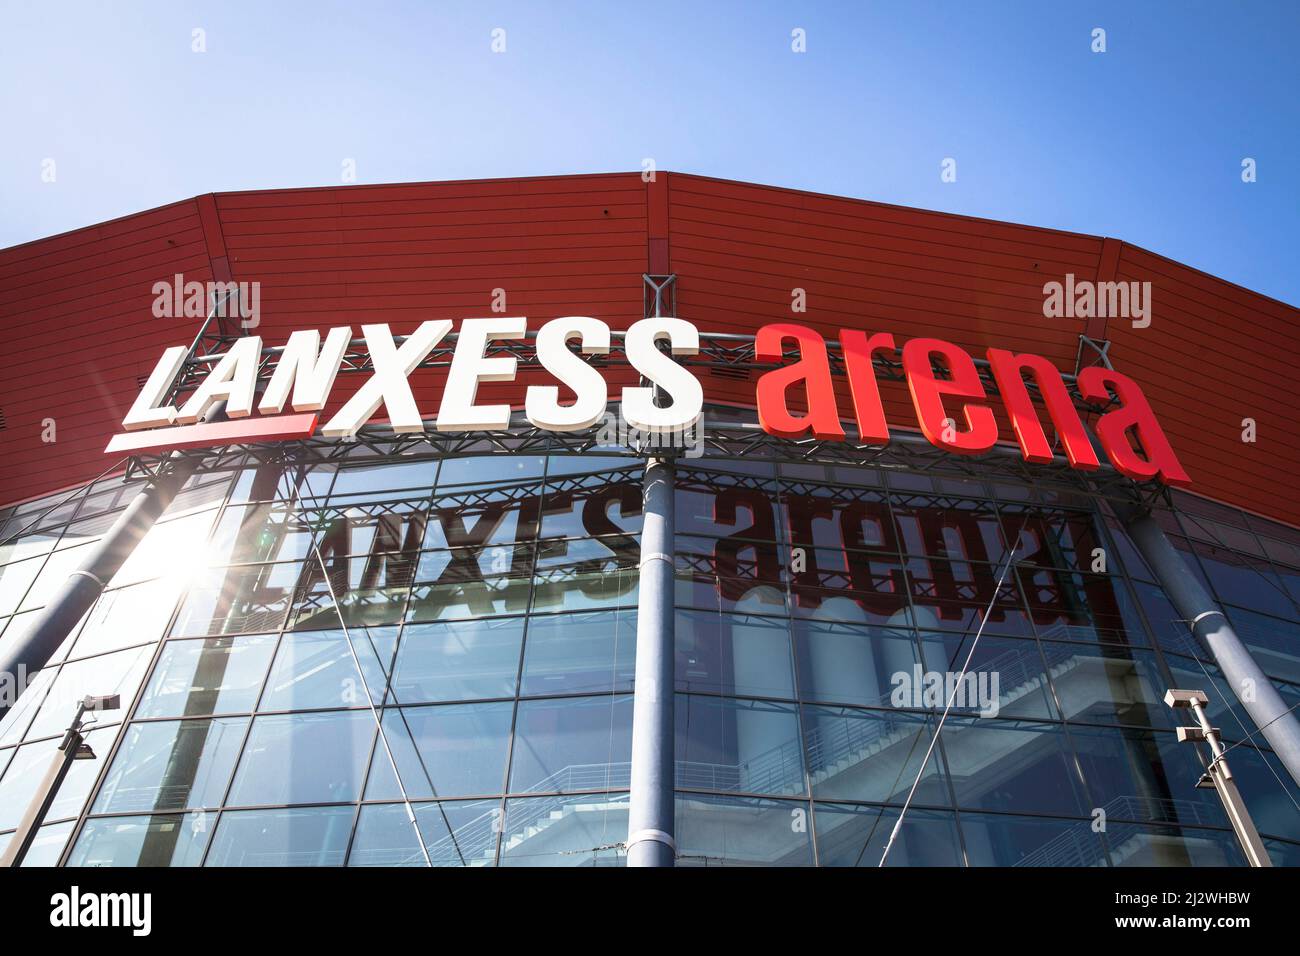 the Lanxess Arena in the town district Deutz, Cologne, Germany. die Lanxess Arena im Stadtteil Deutz, Koeln, Deutschland. Stock Photo